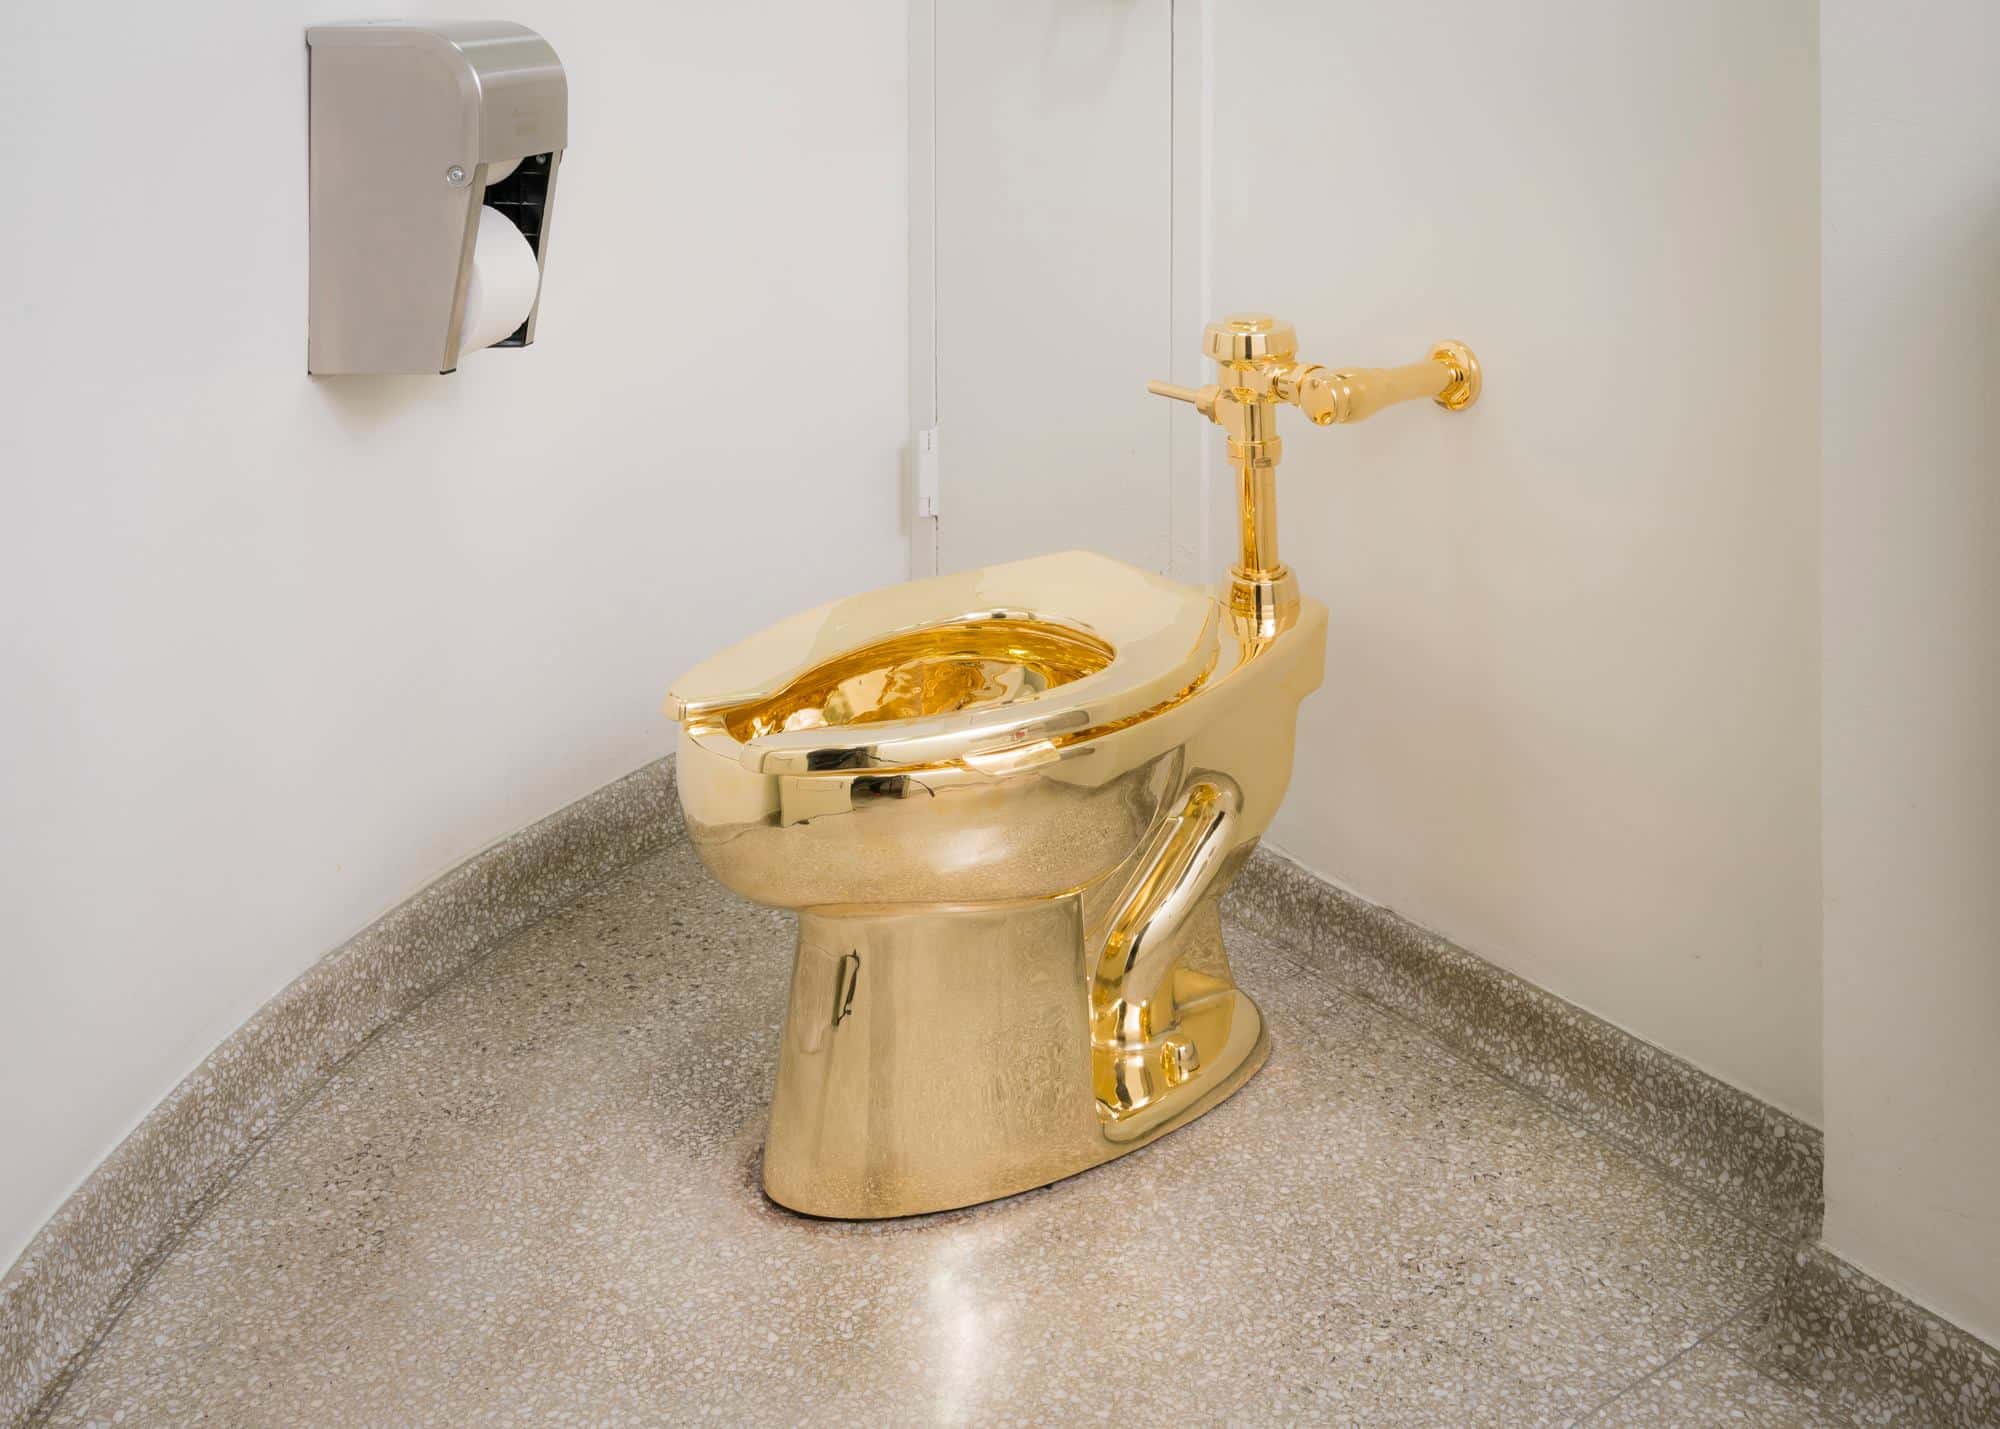 "Golden Toilet" by Maurizio Cattelan retrospective at the Guggenheim